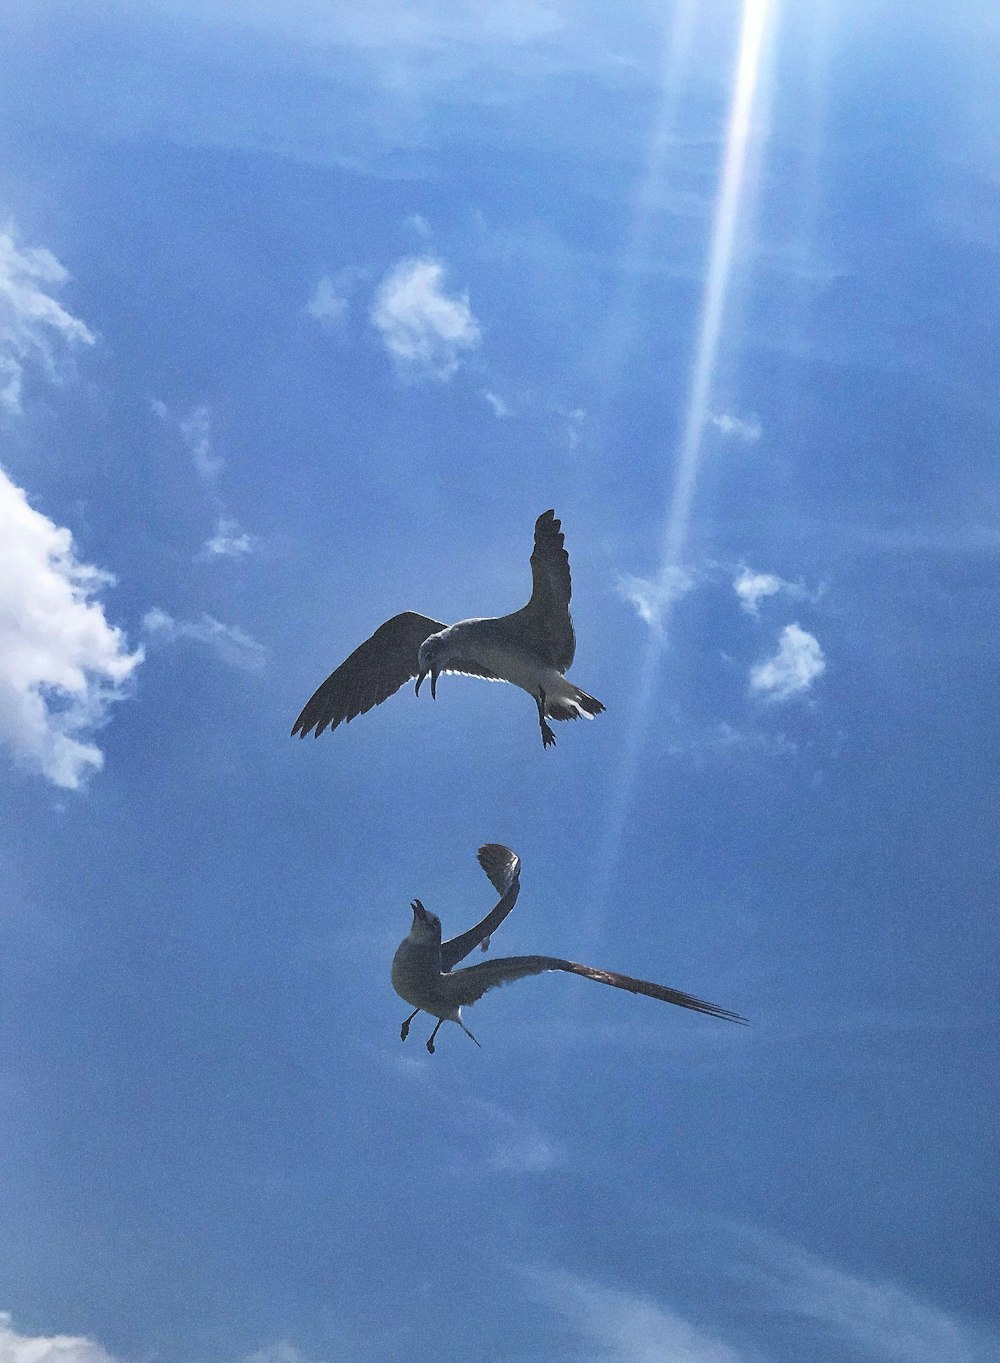 two gray birds on flight